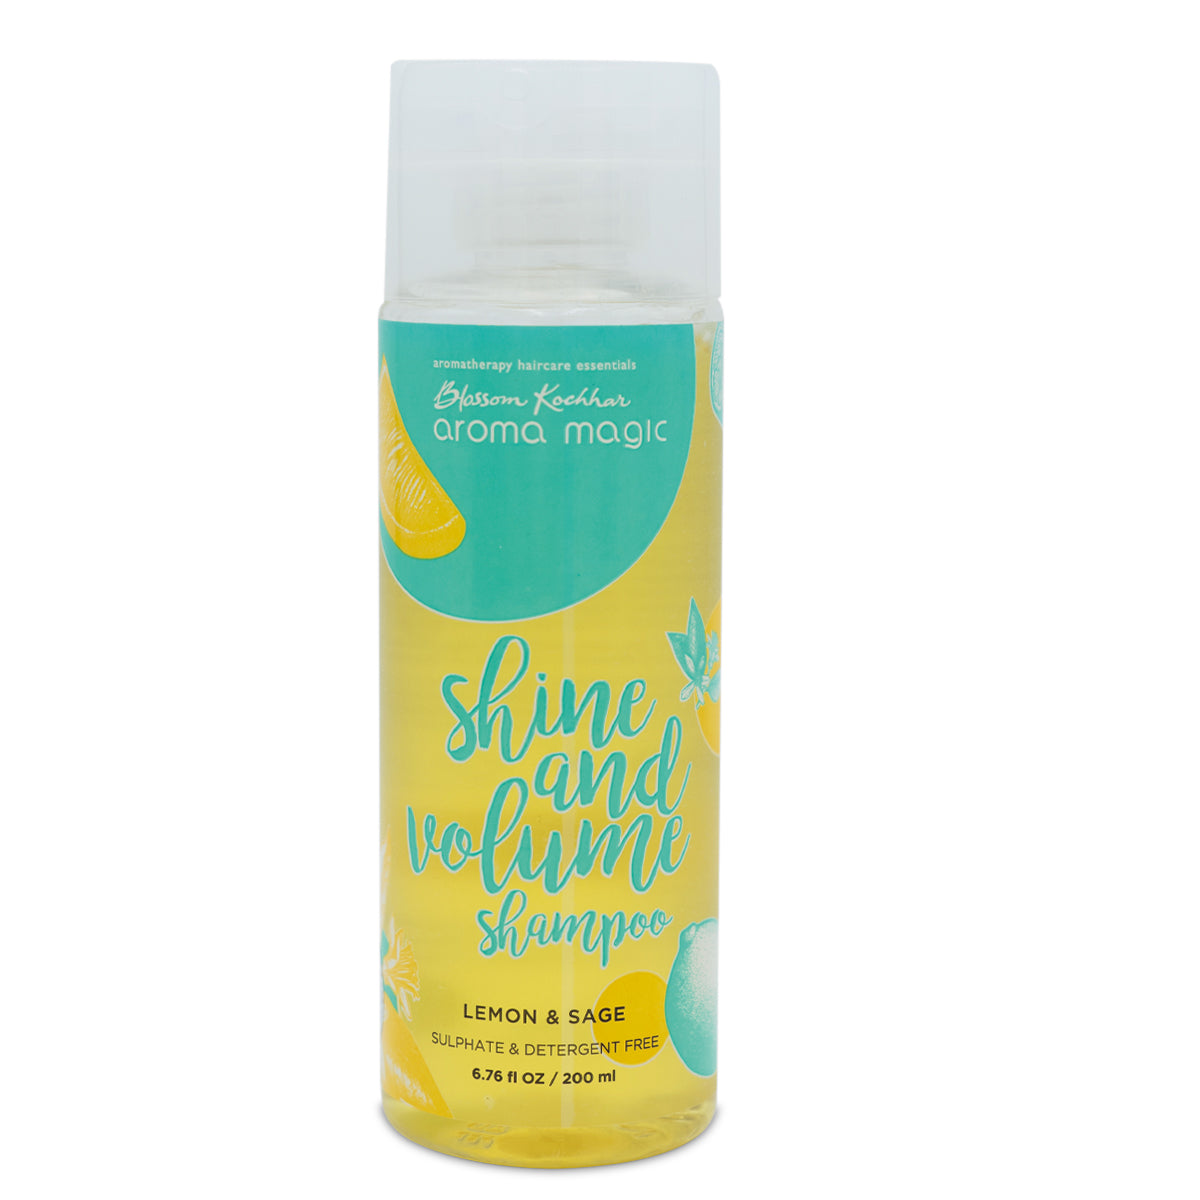 Shine and Volume Shampoo